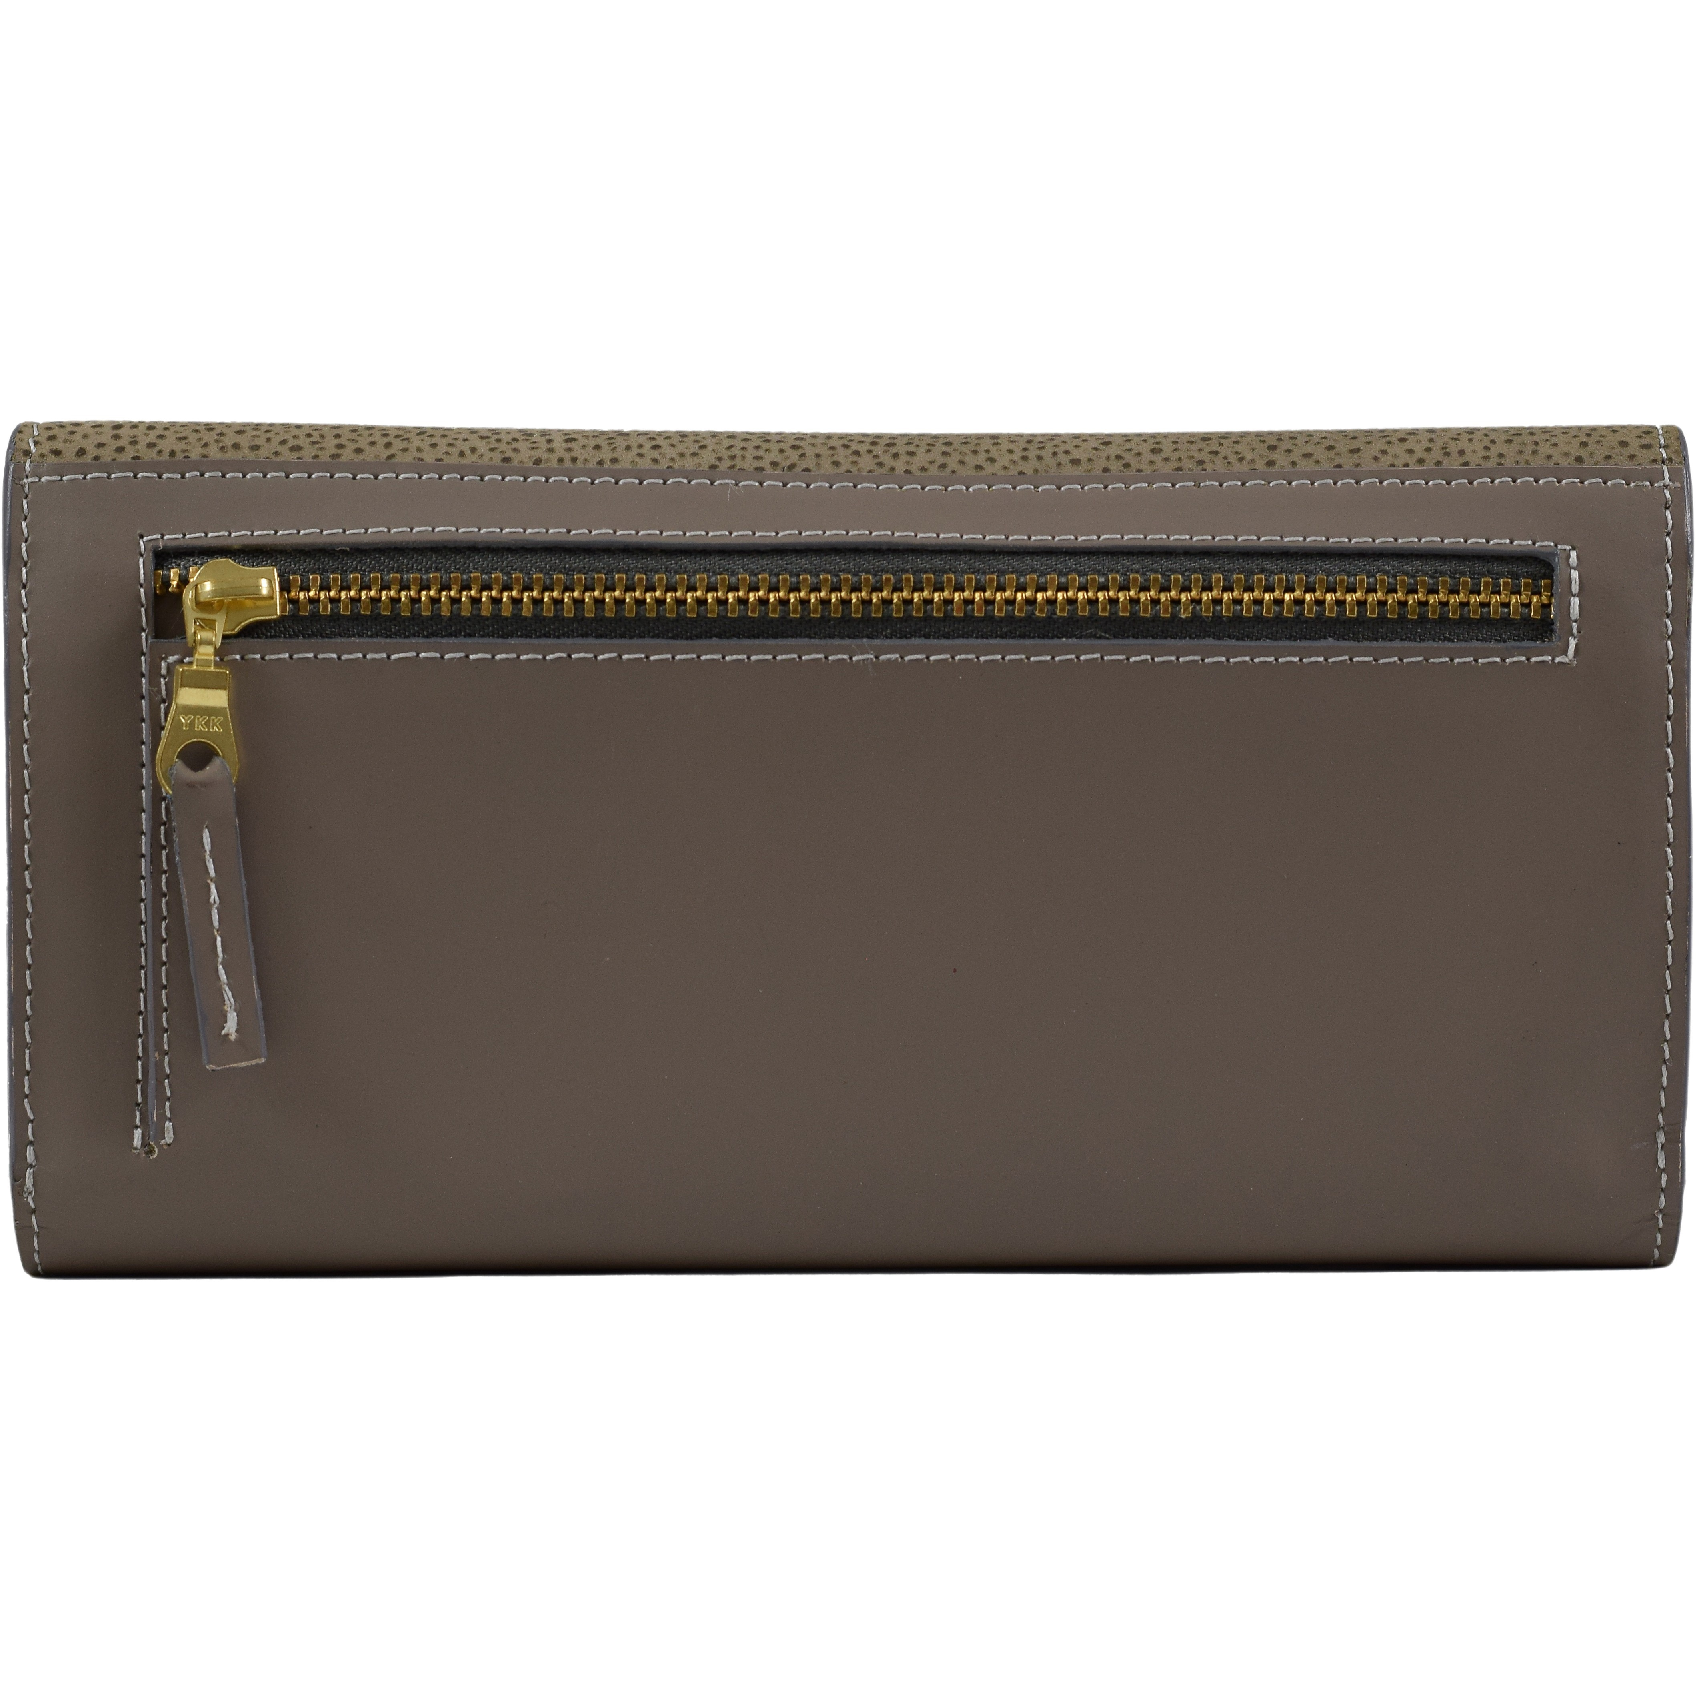 Capreto Ladies Wallet - LAND Leather Goods